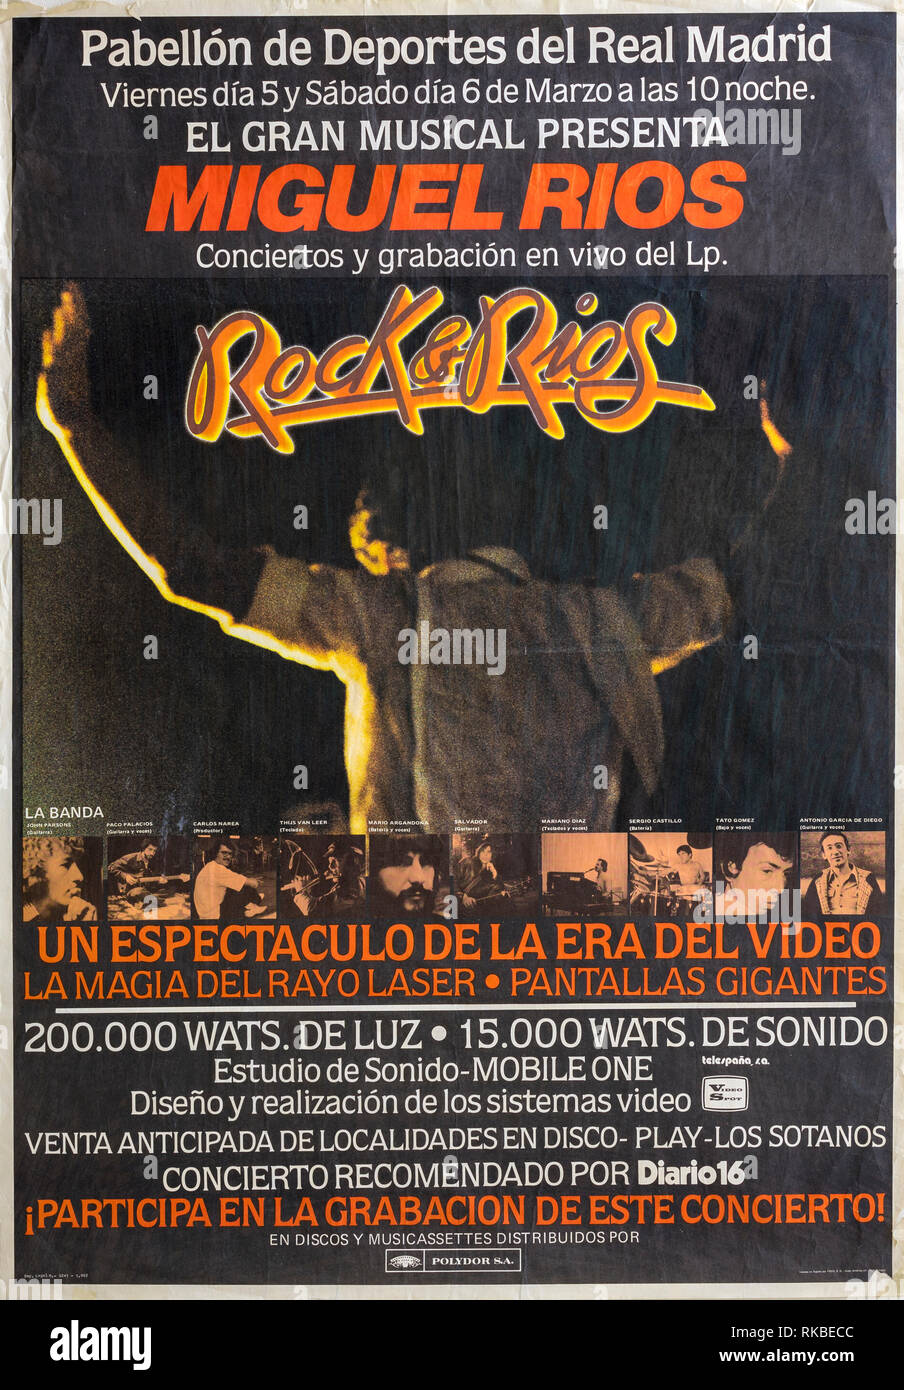 Miguel Rios, Rock e Rios, Madrid 1982, concerto musicale poster Foto Stock